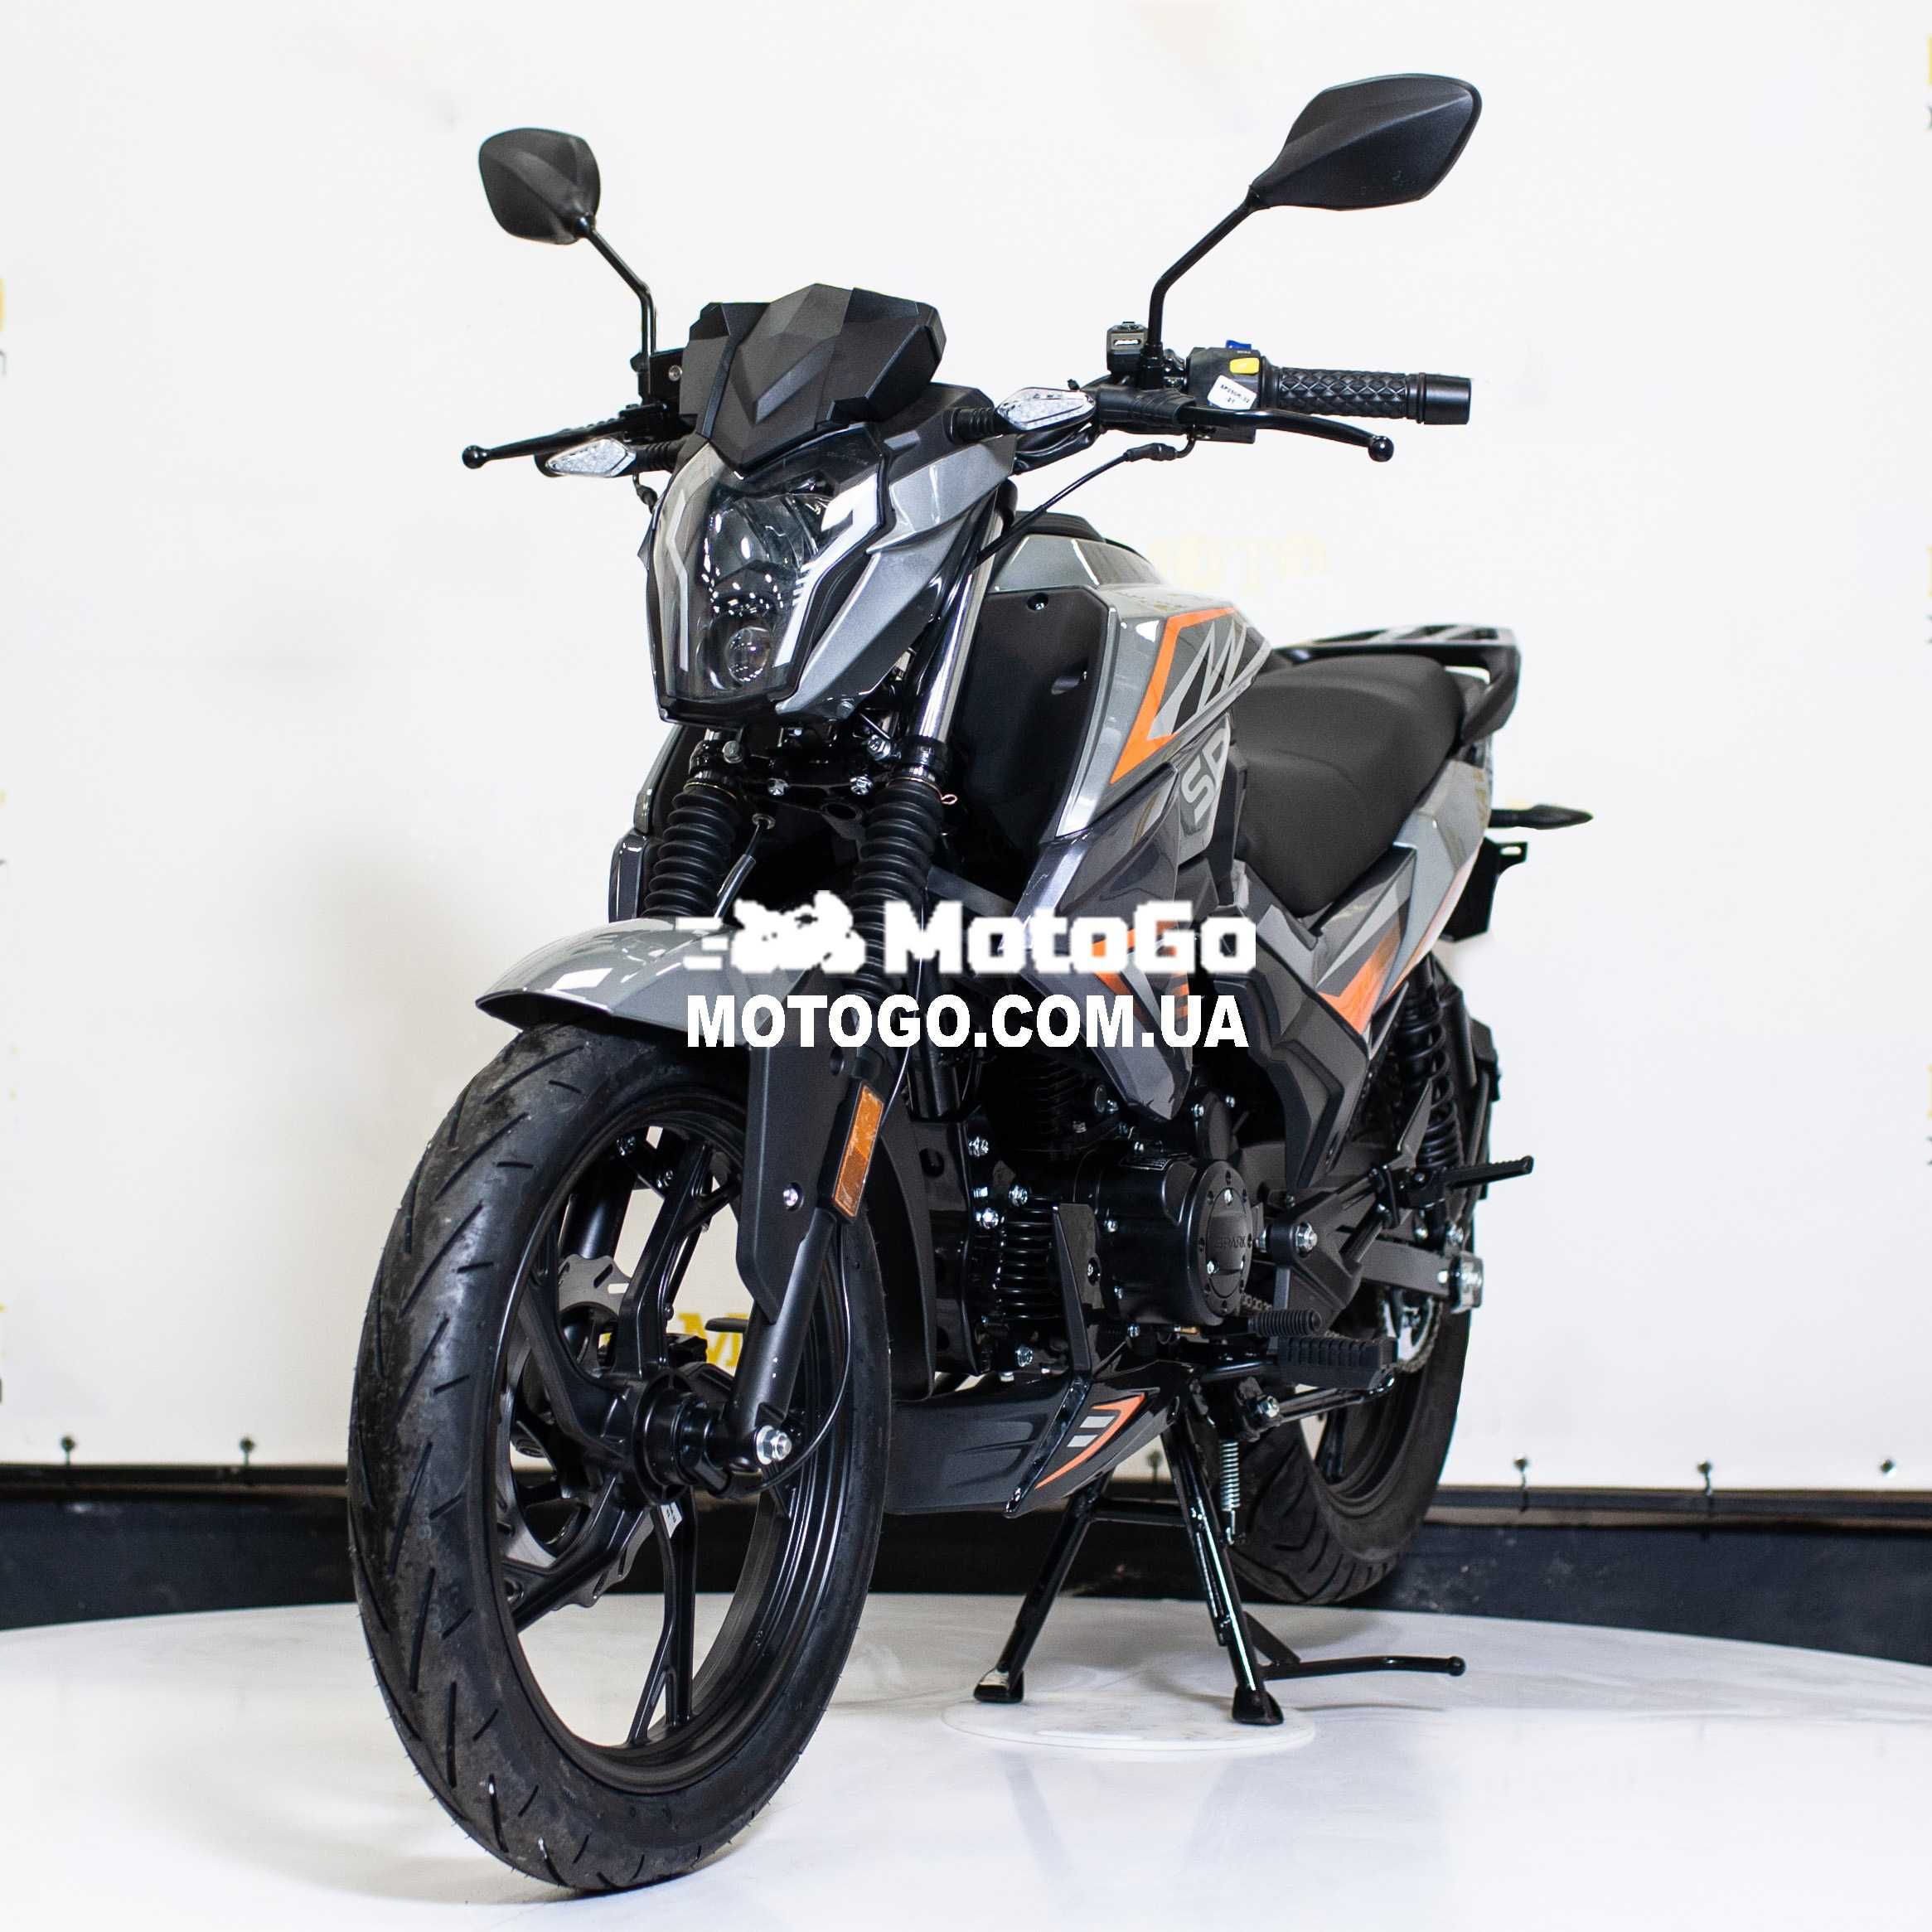 Новый Мотоцикл Spark SP200R-32. Гарантия, Сервис - Мотосалон MotoGo !